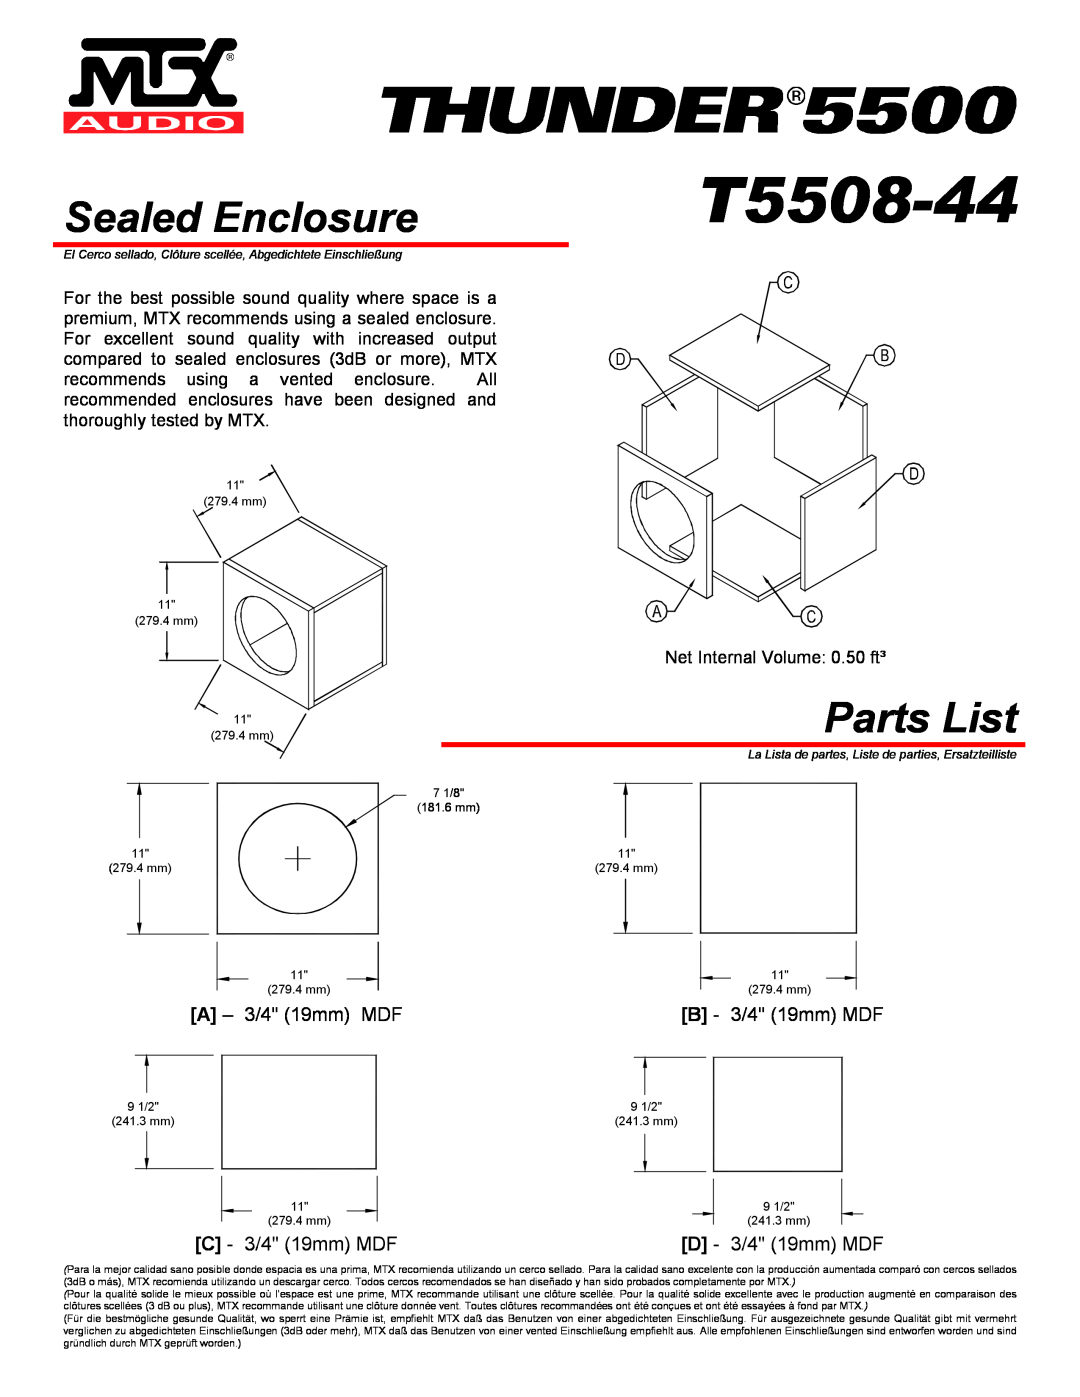 MTX Audio T5508-44 Sealed Enclosure, Parts List, A - 3/4 19mm MDF, B - 3/4 19mm MDF, C - 3/4 19mm MDF, D - 3/4 19mm MDF 